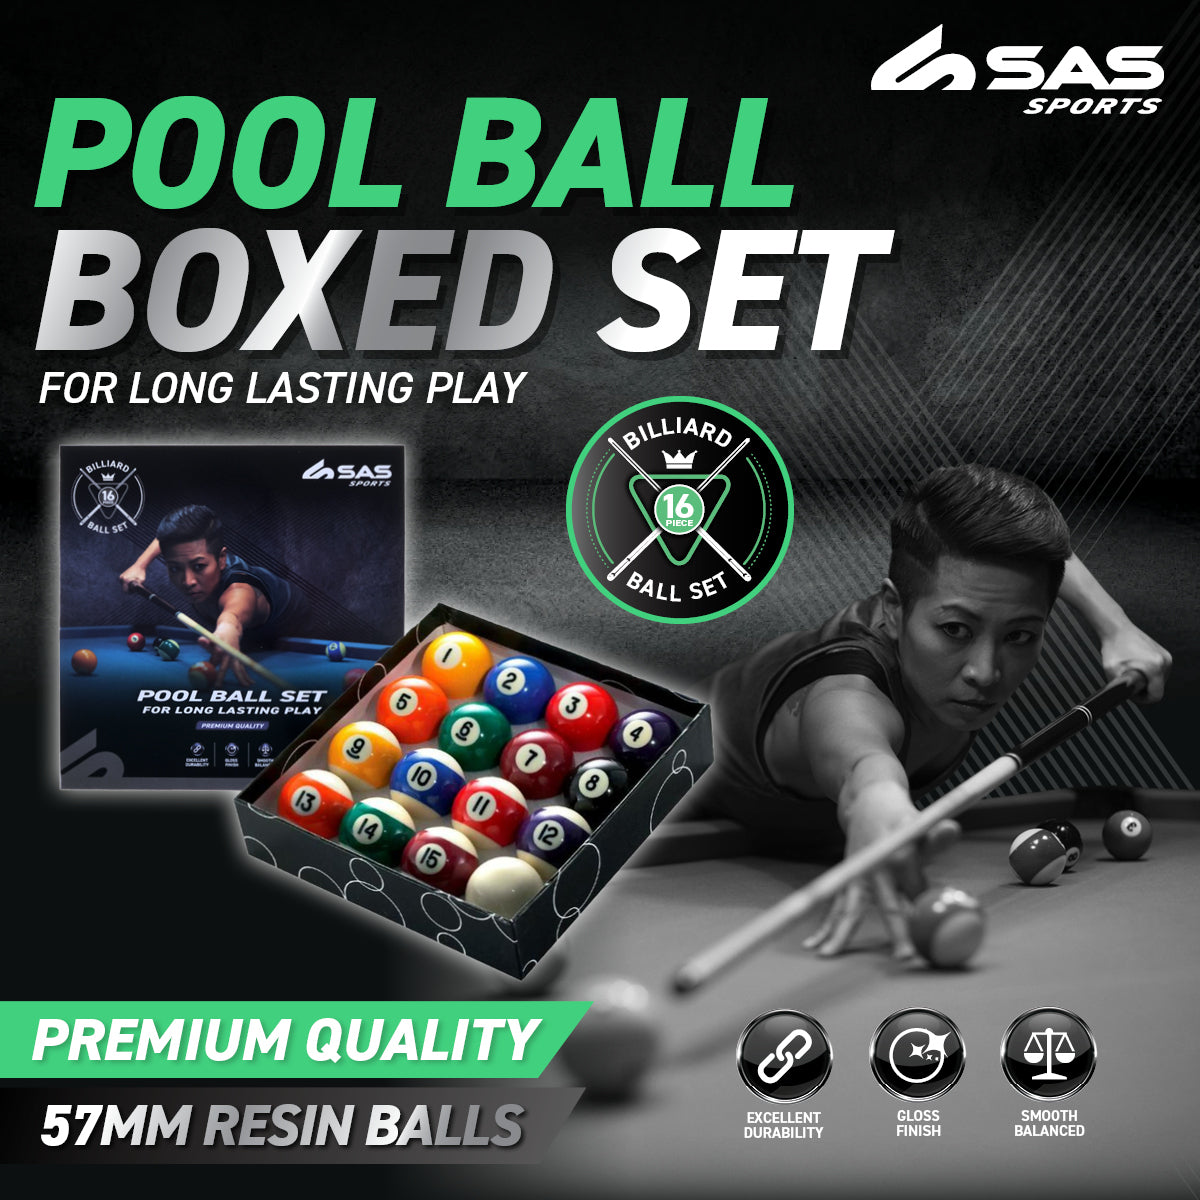 SAS Sports Pool Ball Boxed Set Premium Quality & Durability Gloss Finish Deals499